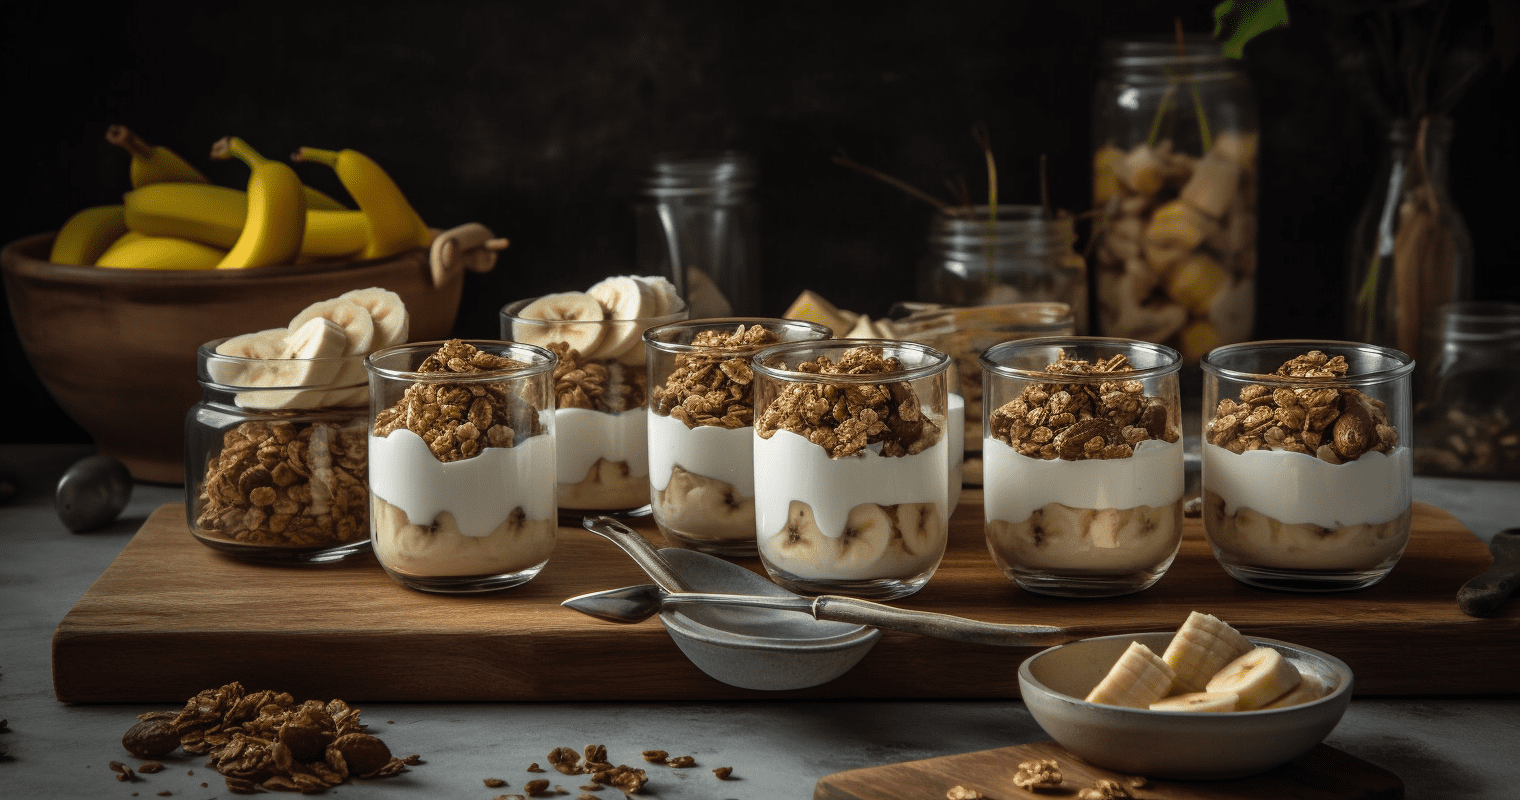 Greek Yogurt Parfait with Crunchy Granola and Sliced Bananas